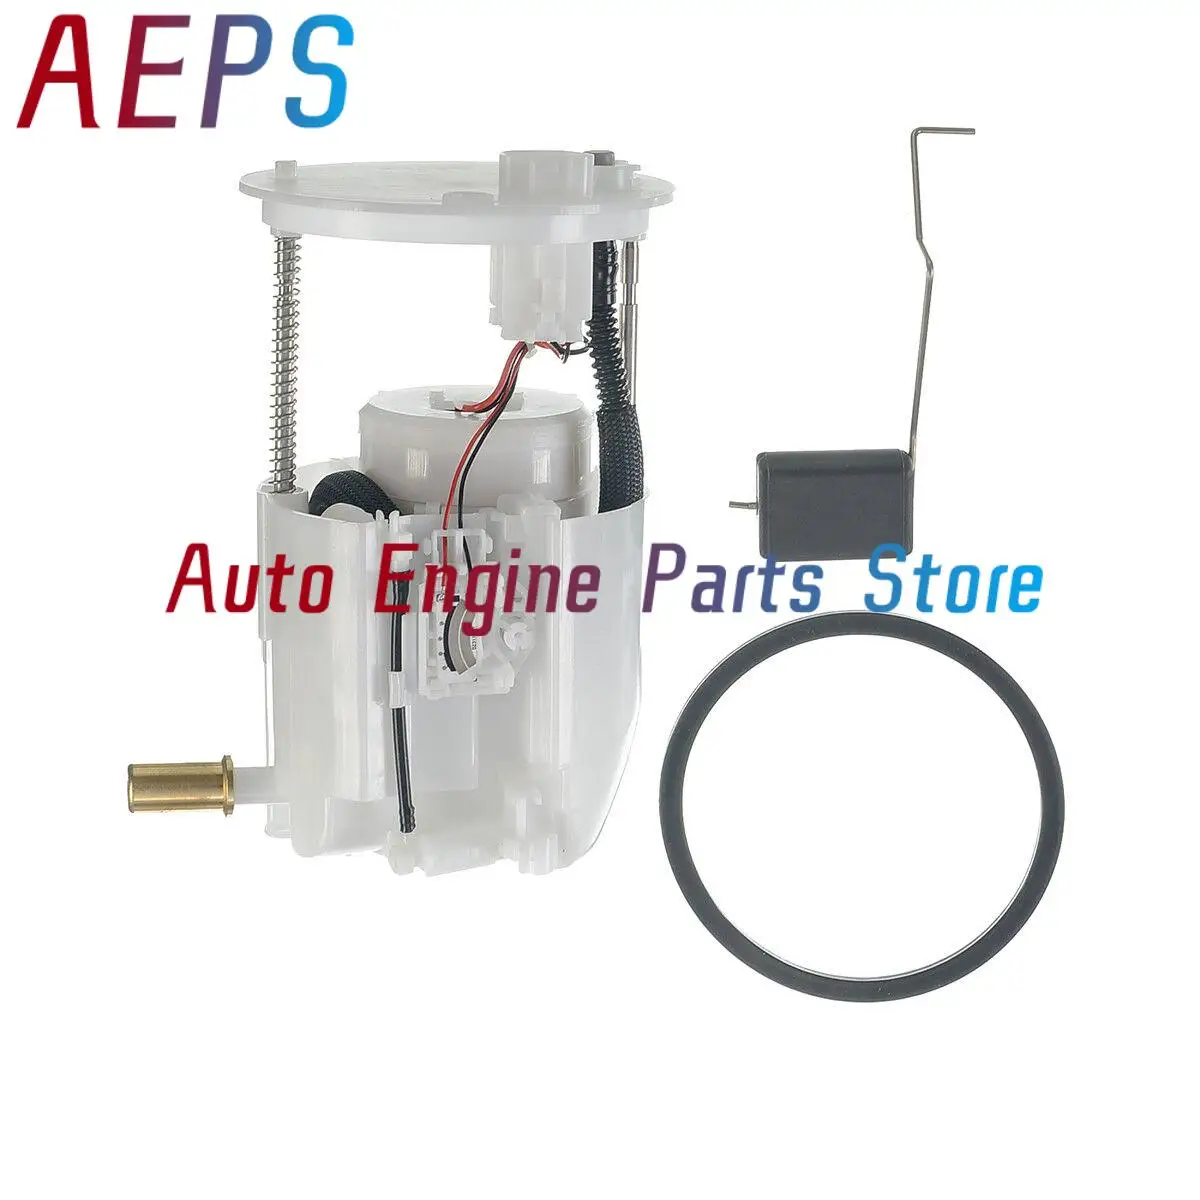 

Electrical Fuel Pump Module Assembly For Toyota Venza V6 3.5L 2009-2015 E8940M SP8940M FG1765 77020-0T010 770200T010